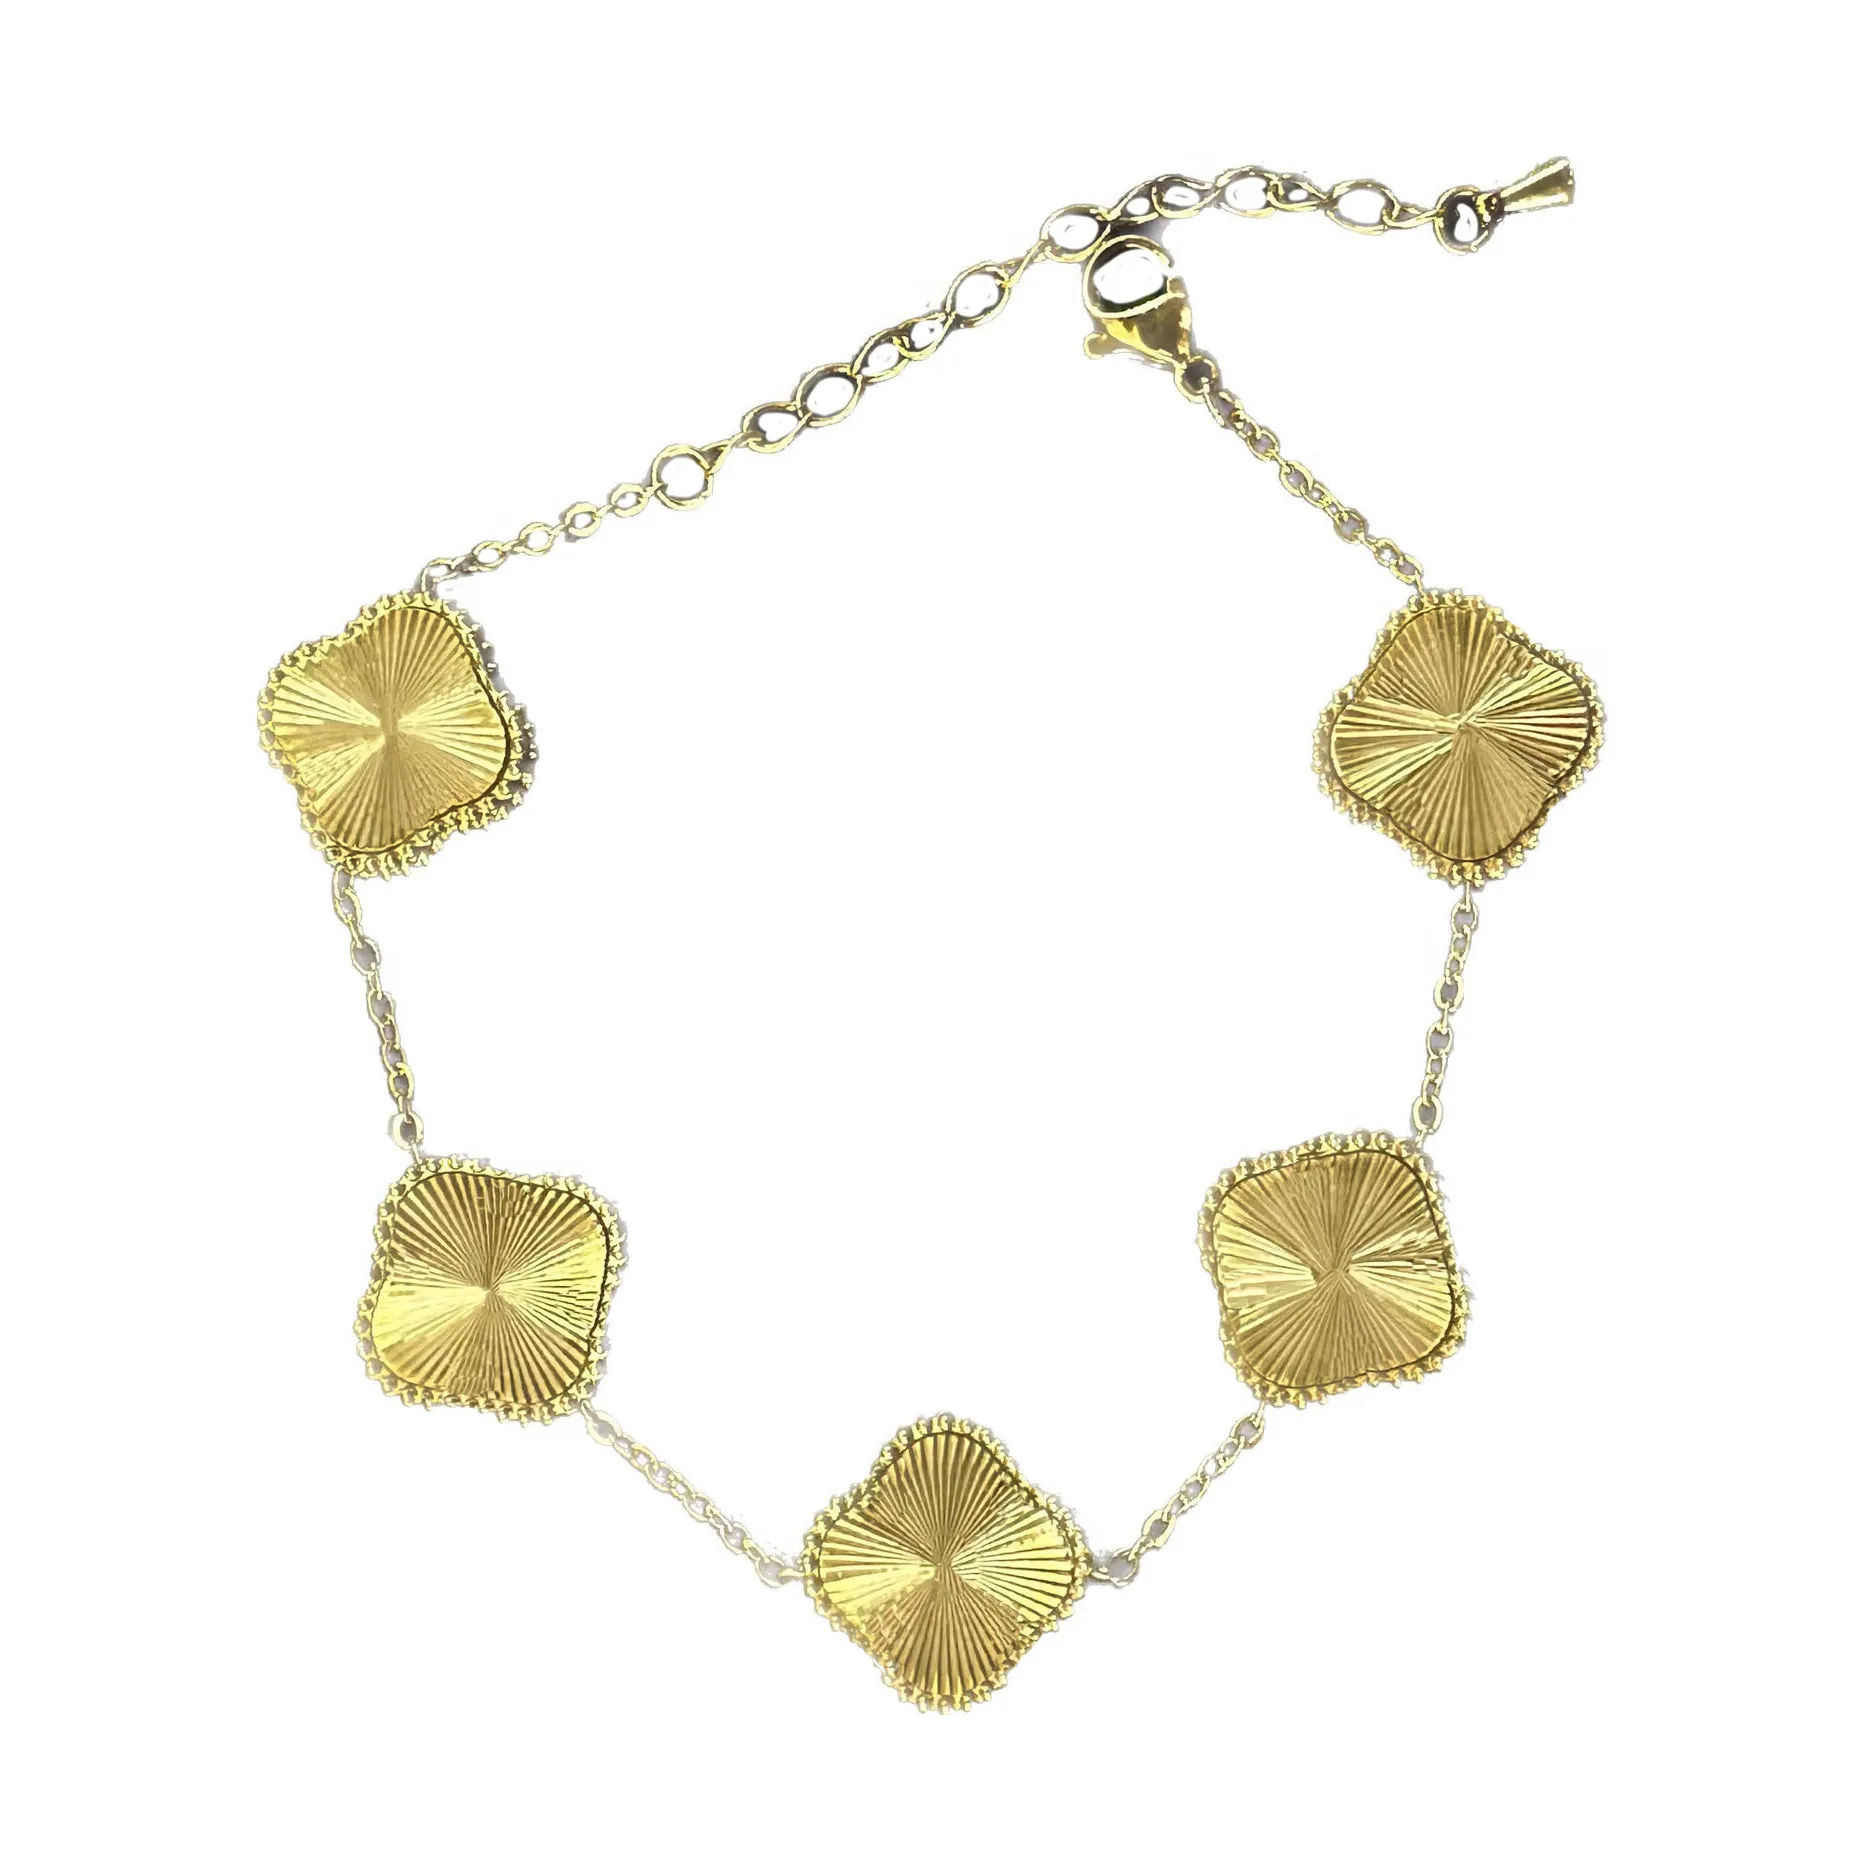 Novo estilo feminino pulseiras pulseira banhado a ouro 18 quilates pulseira de dois lados pulseira de aço inoxidável carta pingente de presente de casamento jóias l011